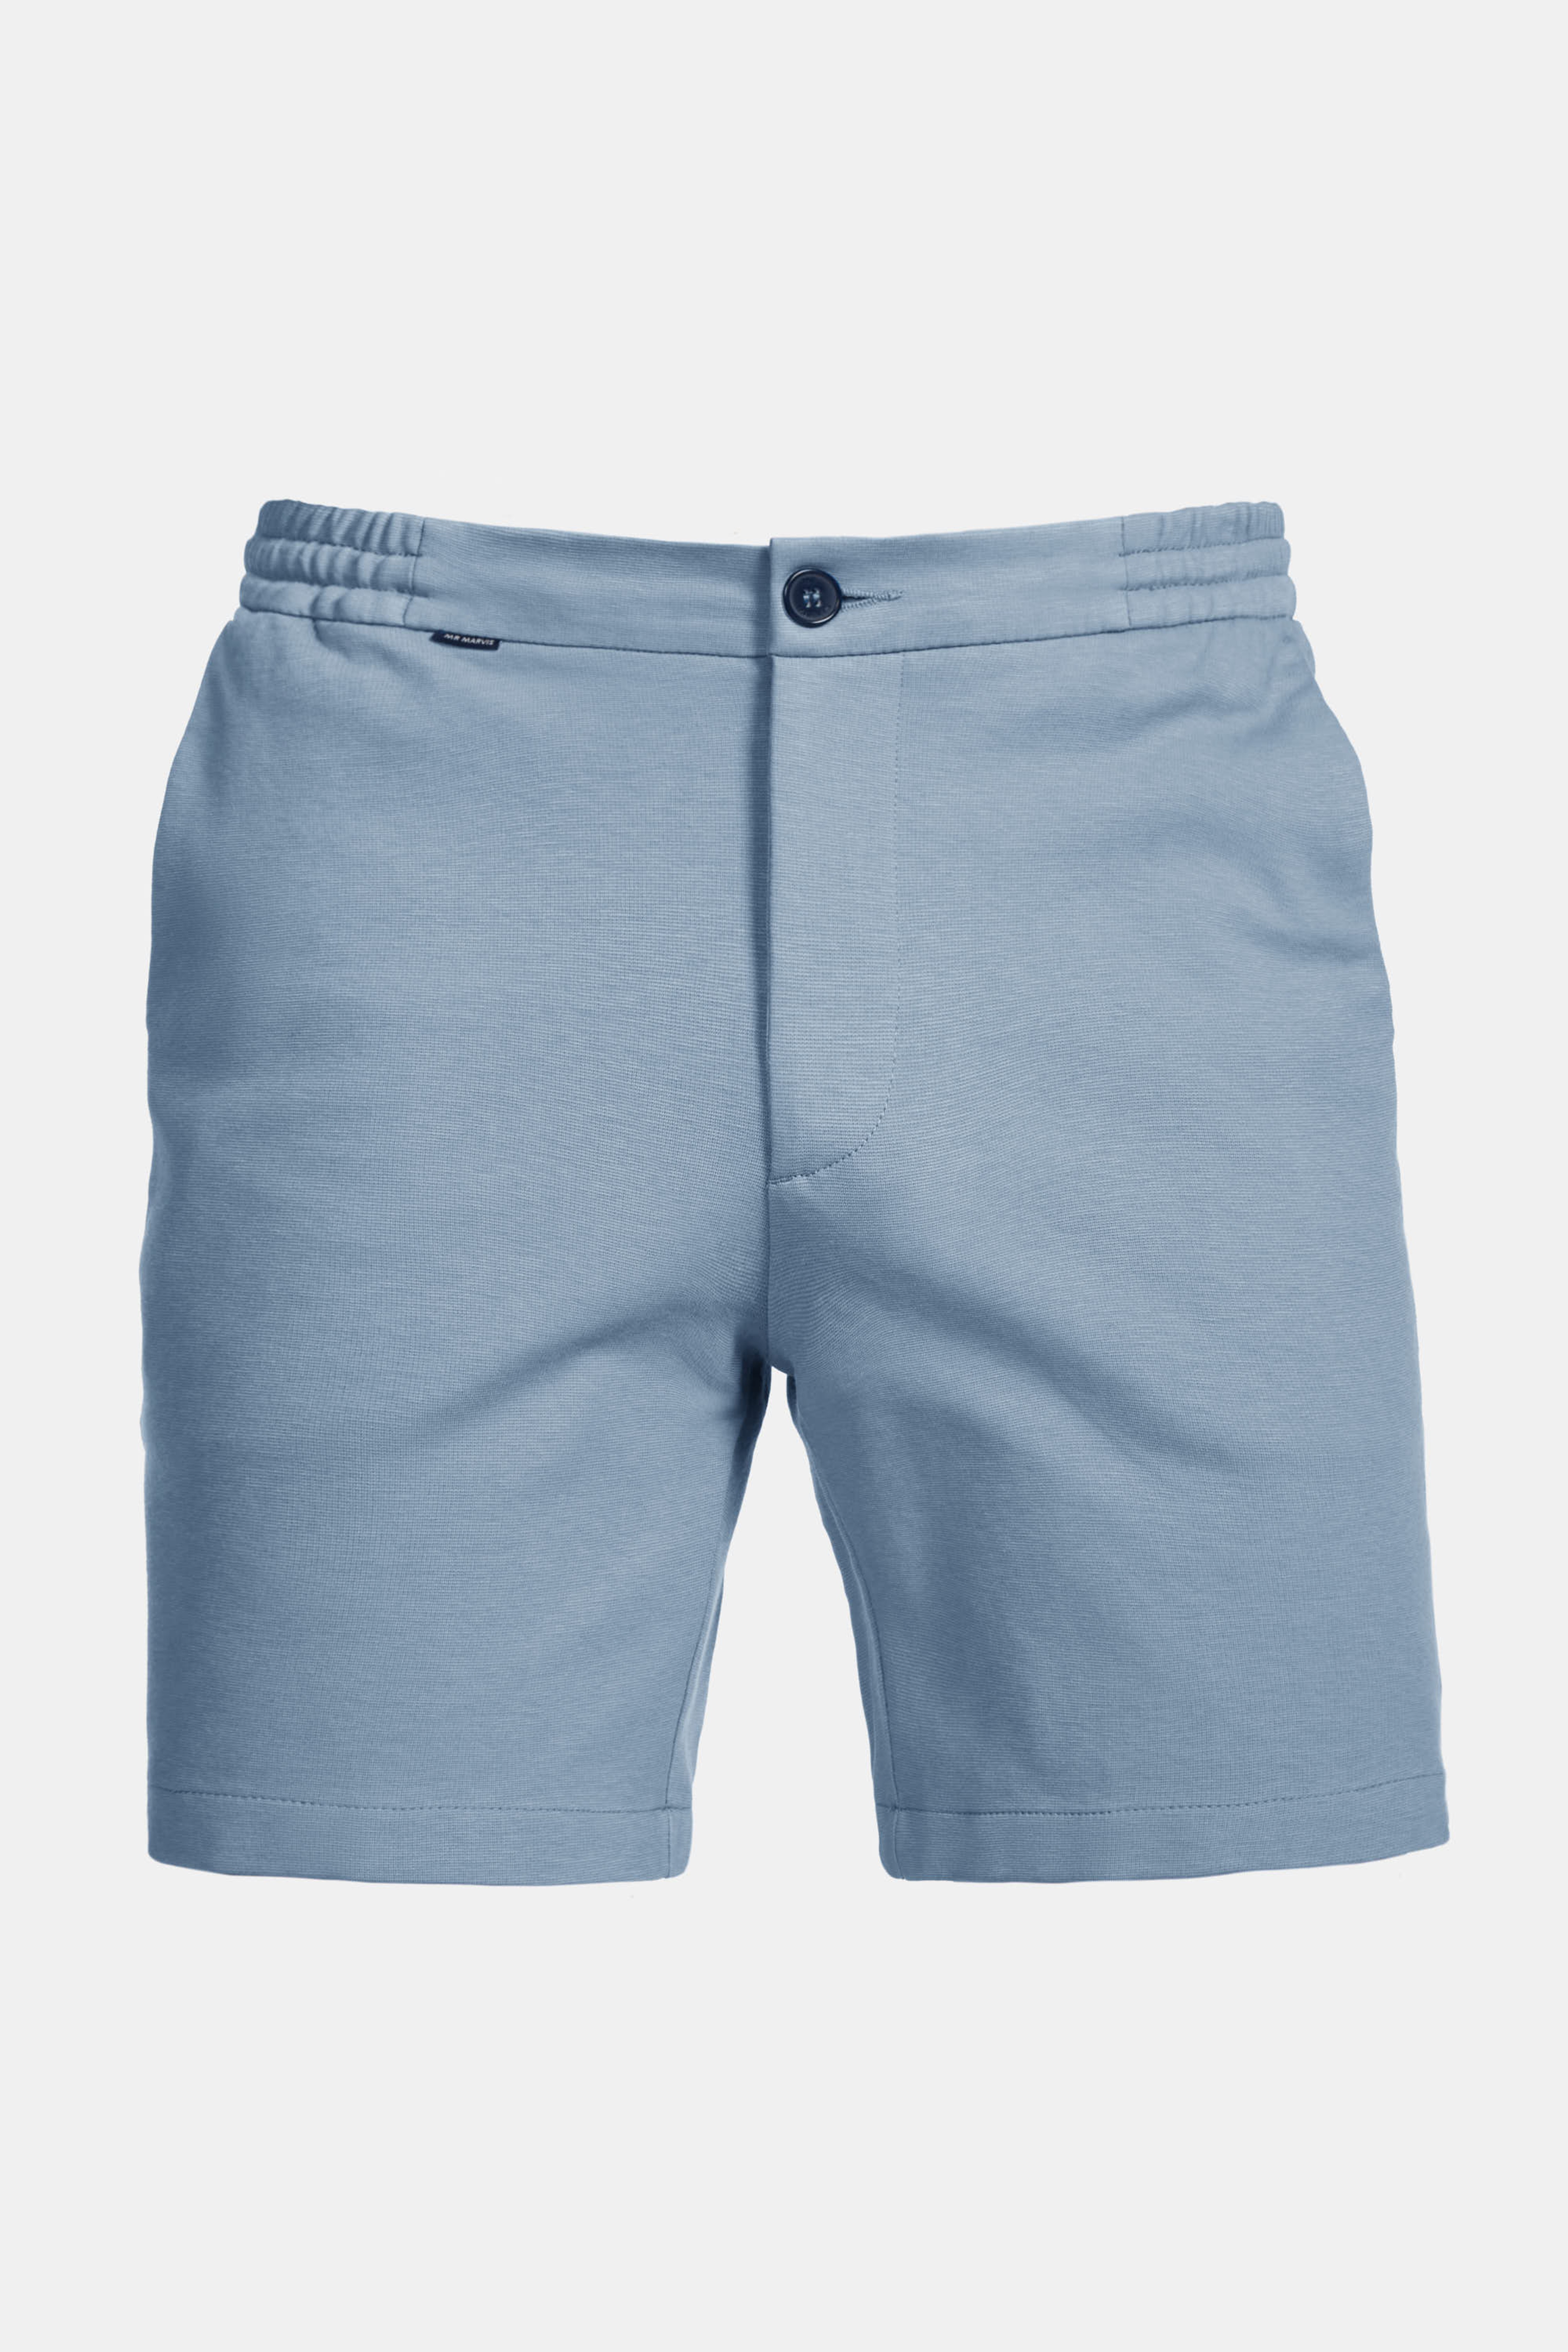 Antarctics - Shorts Easies